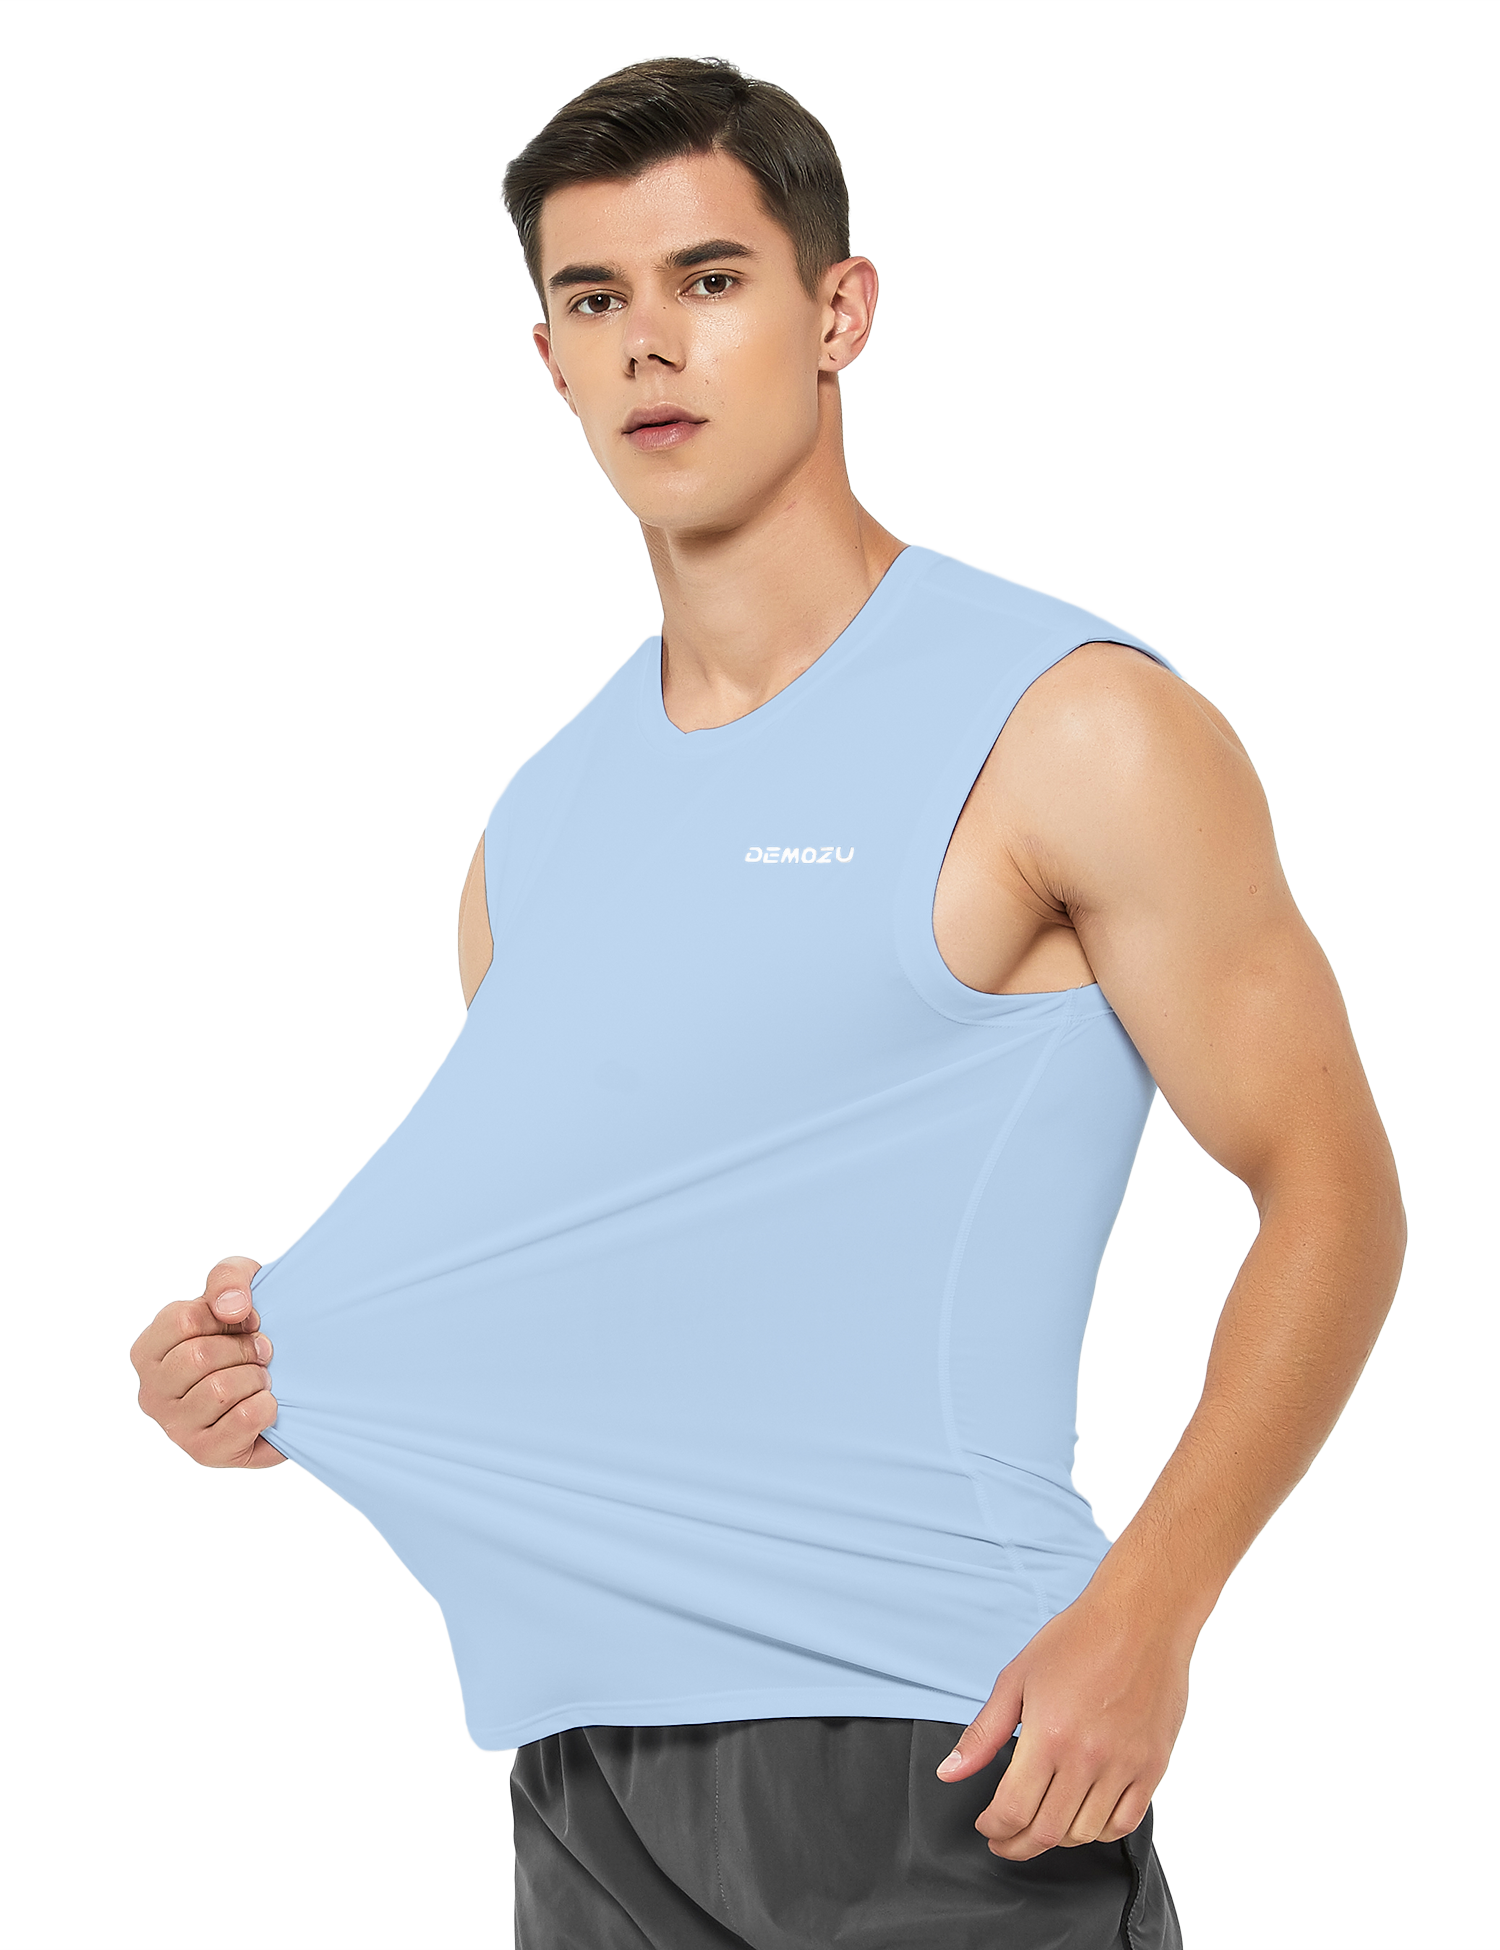 Men's Sleeveless Workout Swim Shirts